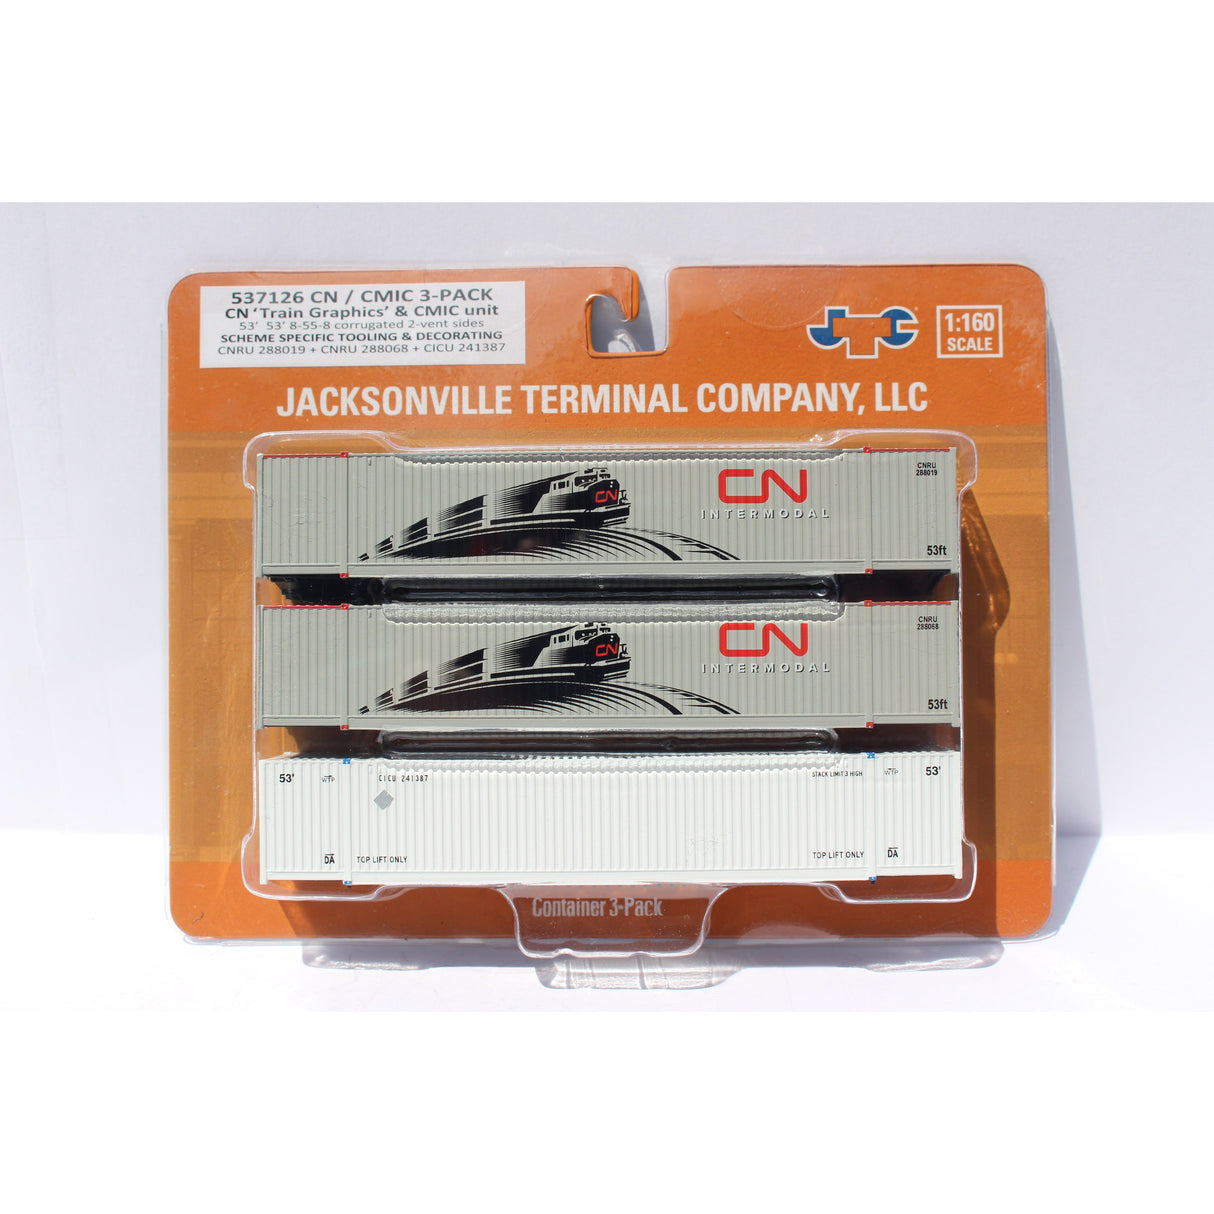 Jacksonville Terminal Company N CN Intermodal 53' High Cube Container 3pk